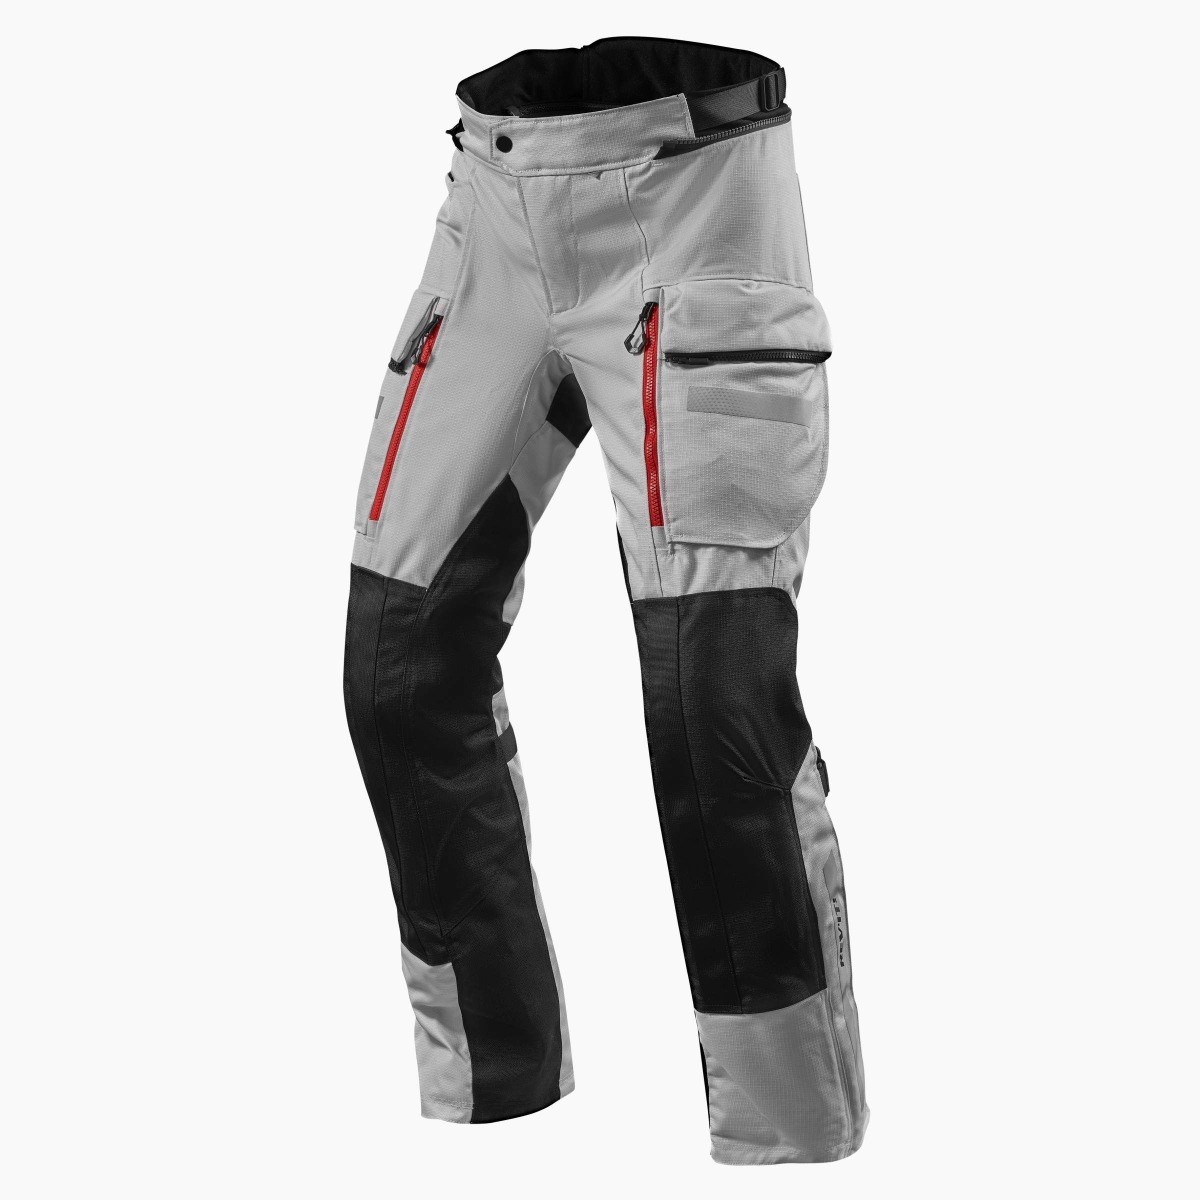 Image of REV'IT! Sand 4 H2O Standard Silver Black Motorcycle Pants Size S EN